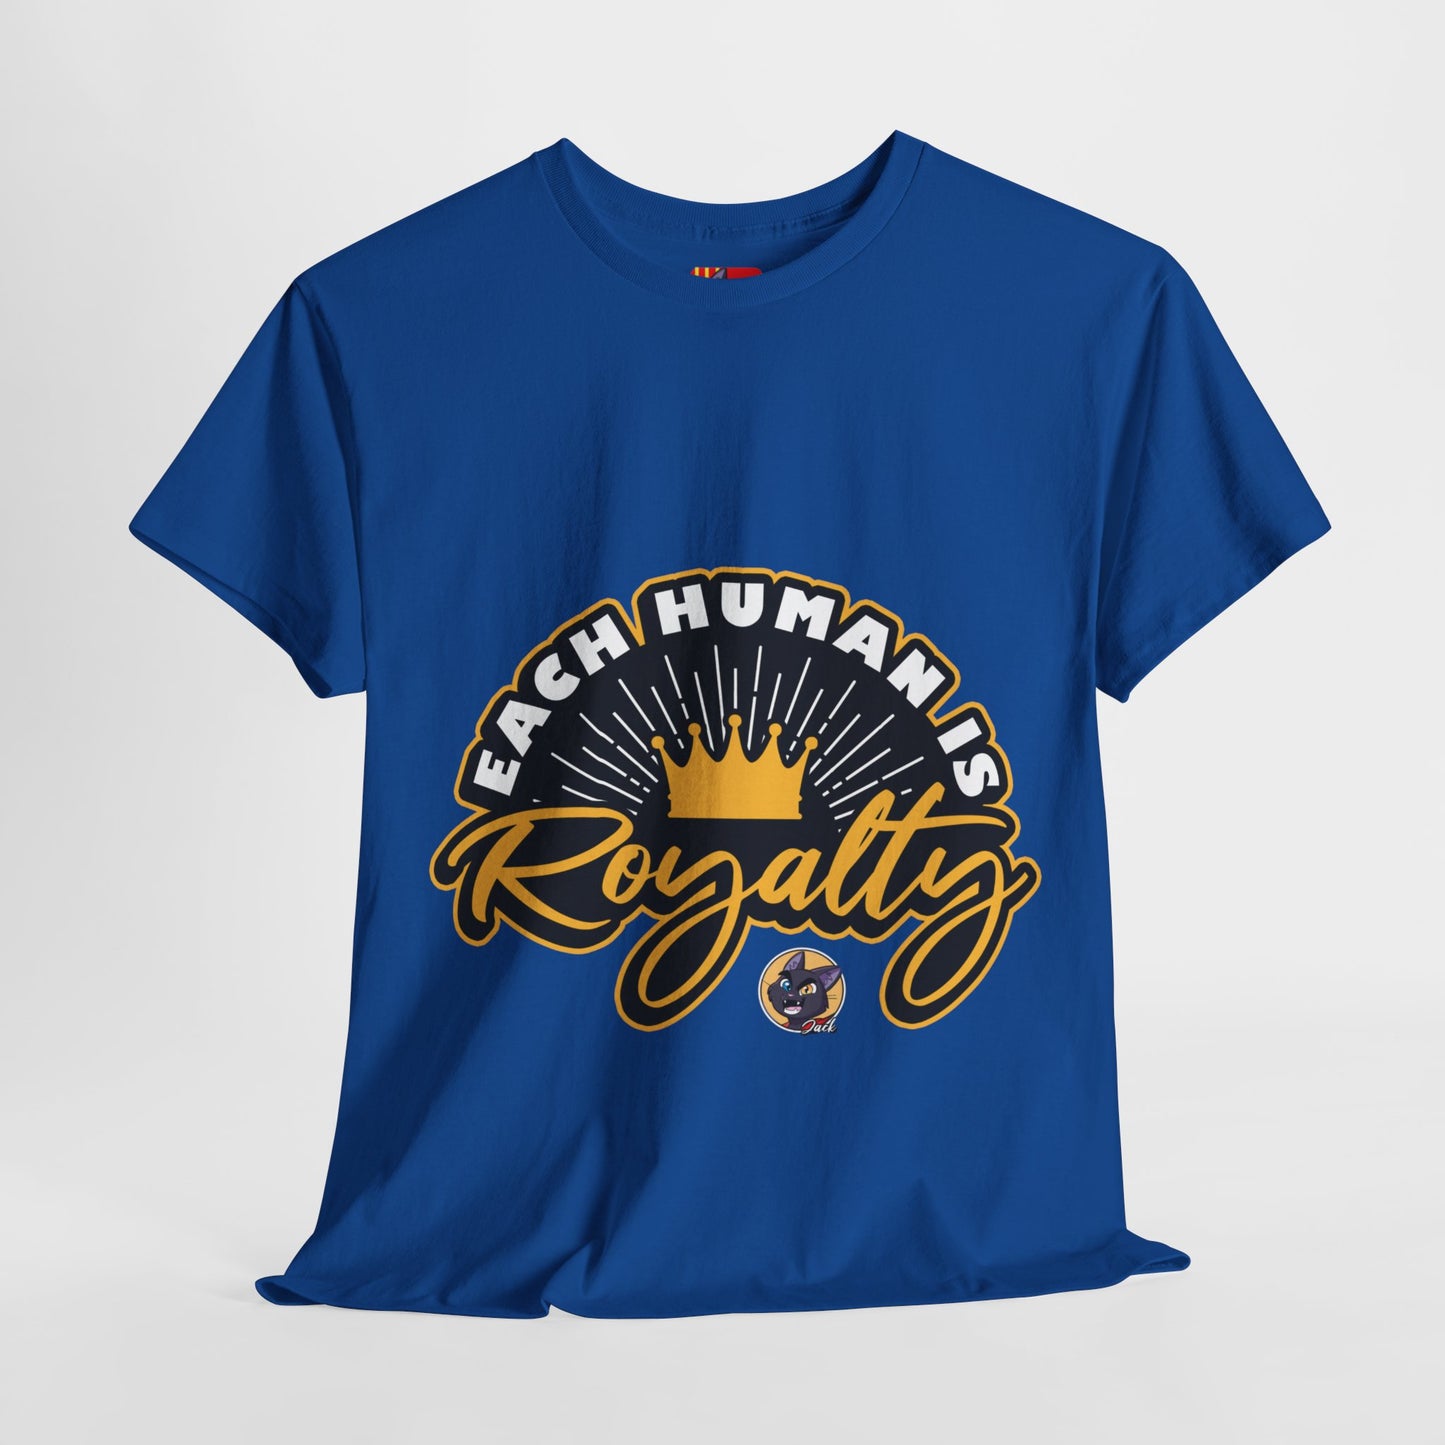 The Free Spirit T-Shirt: Each human is royalty Jack